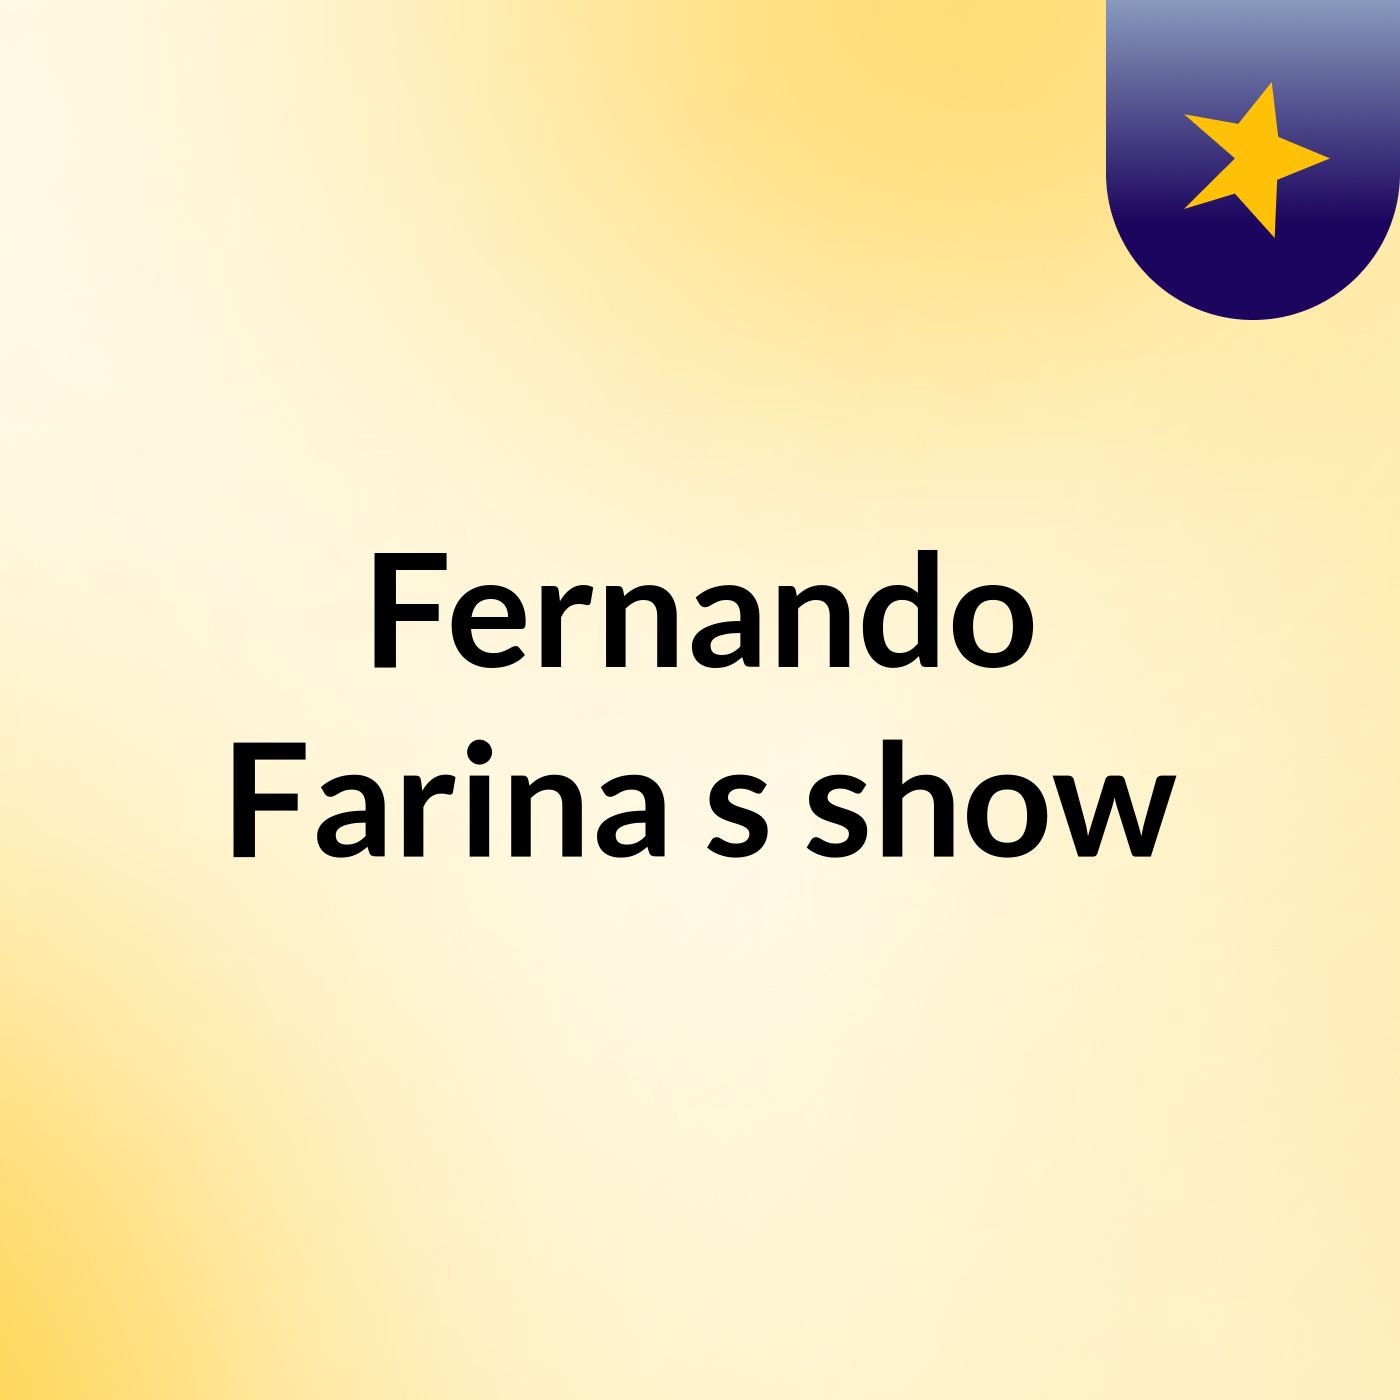 Fernando Farina's show